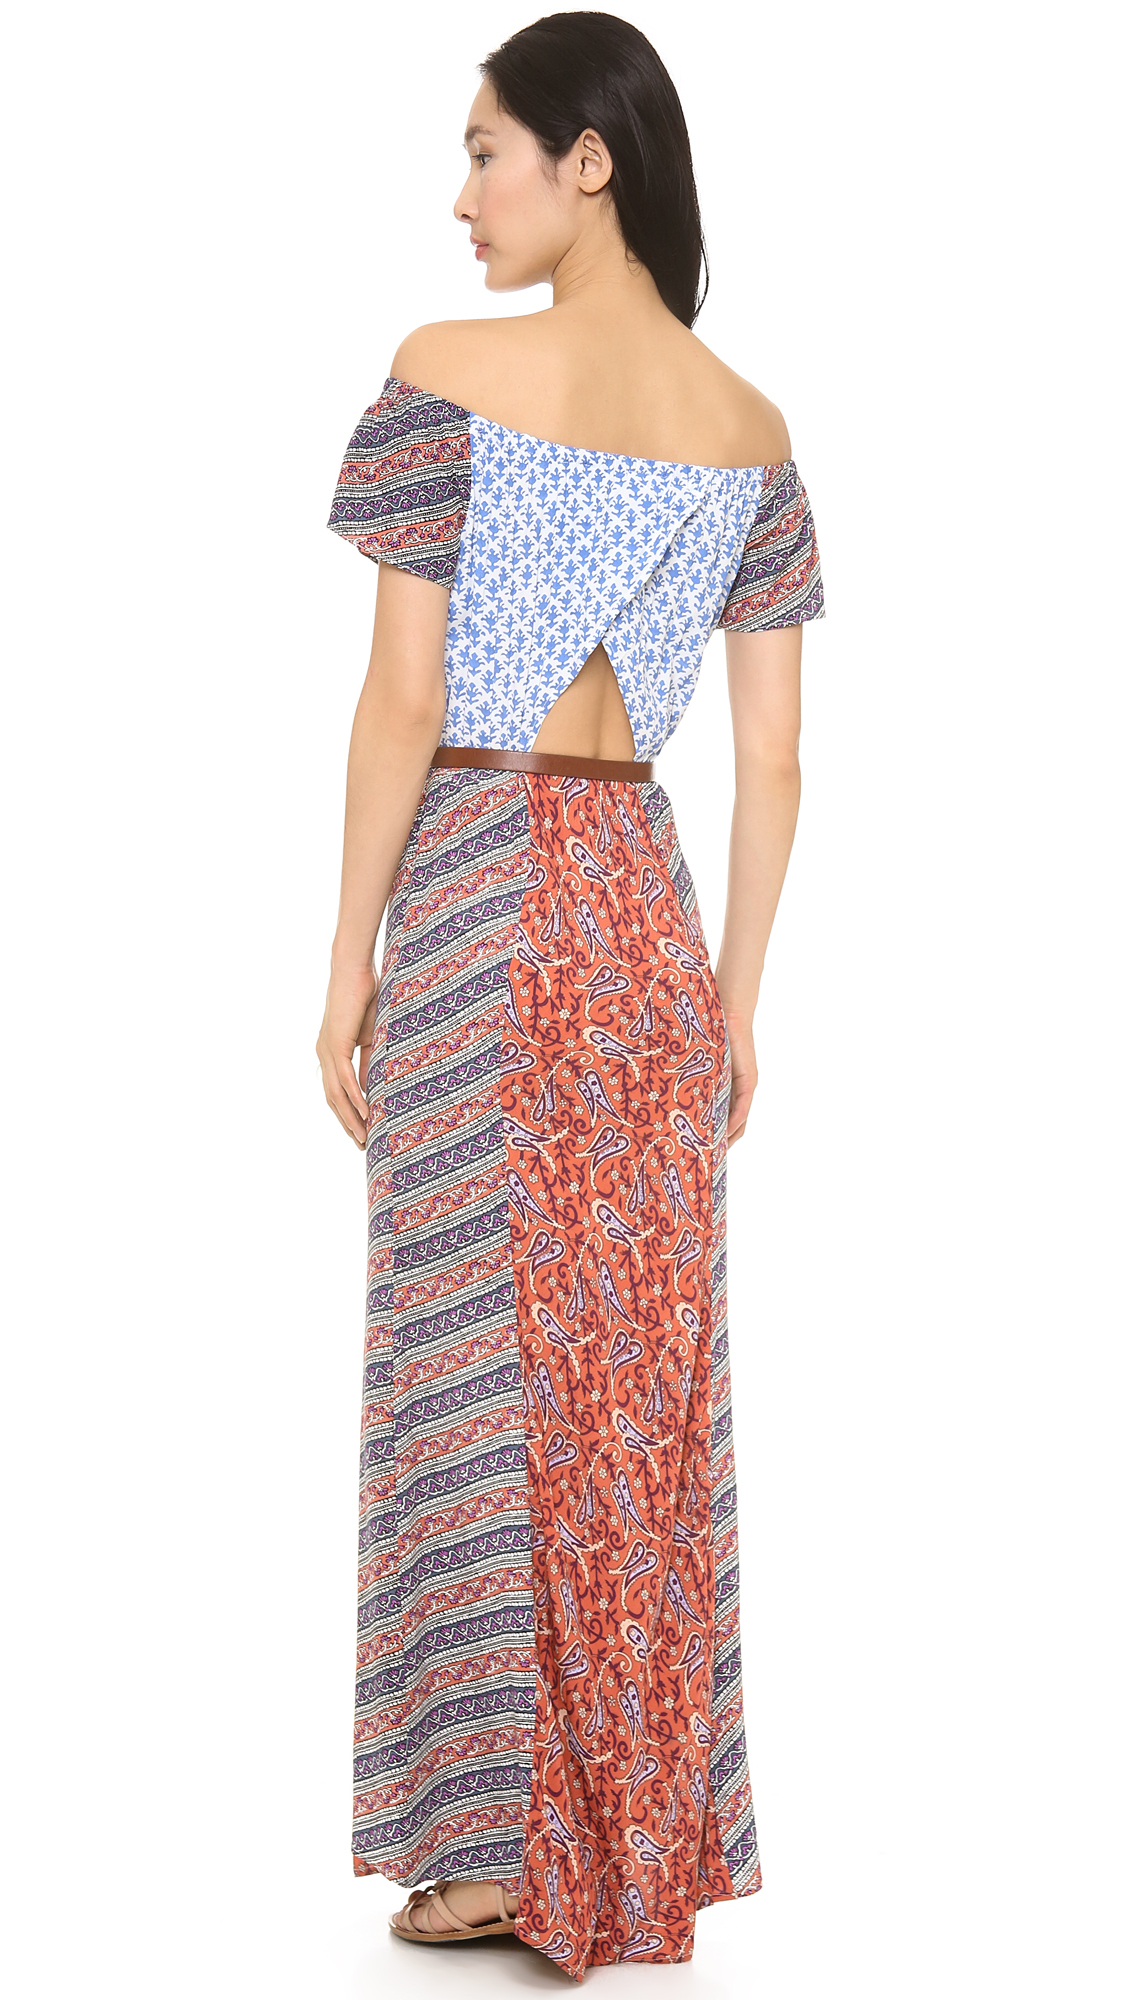 Lyst - Tigerlily Indienne Maxi Dress